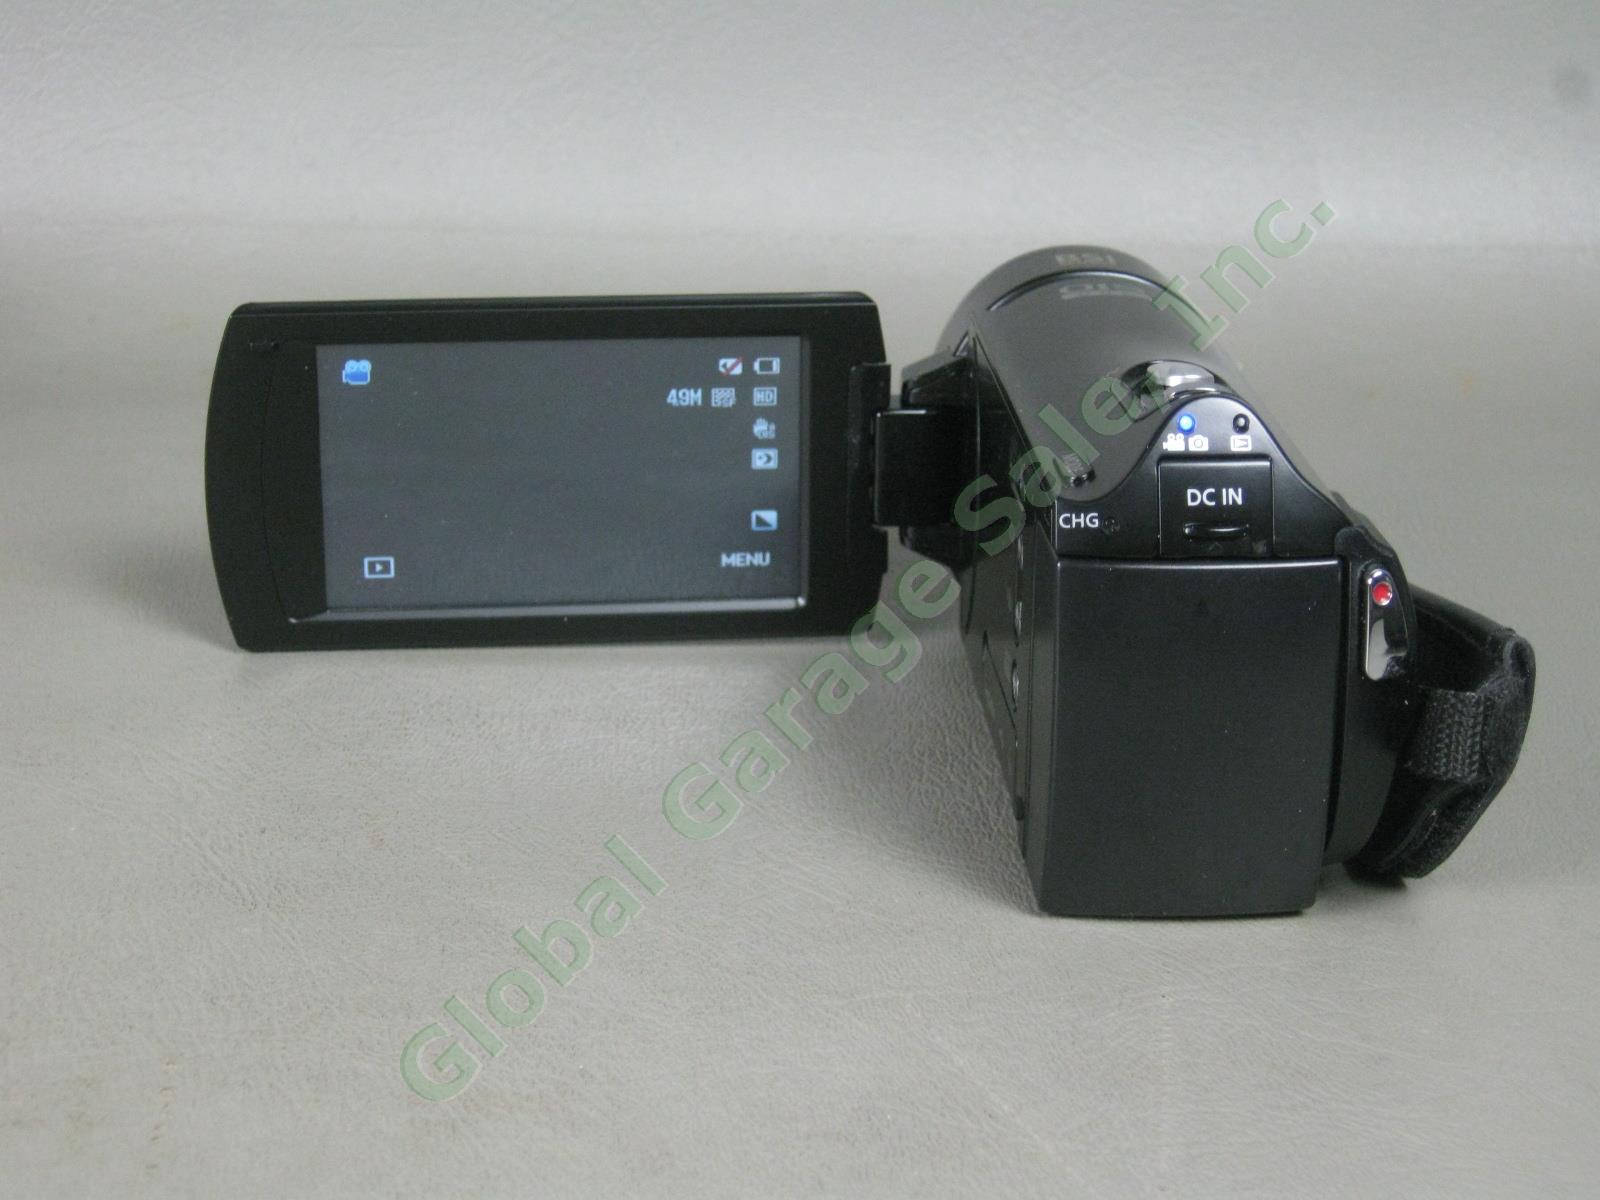 Samsung Full HD 1920x1080 1080i Camcorder HMX-H300BN/XAA Video Camera MINT COND! 4